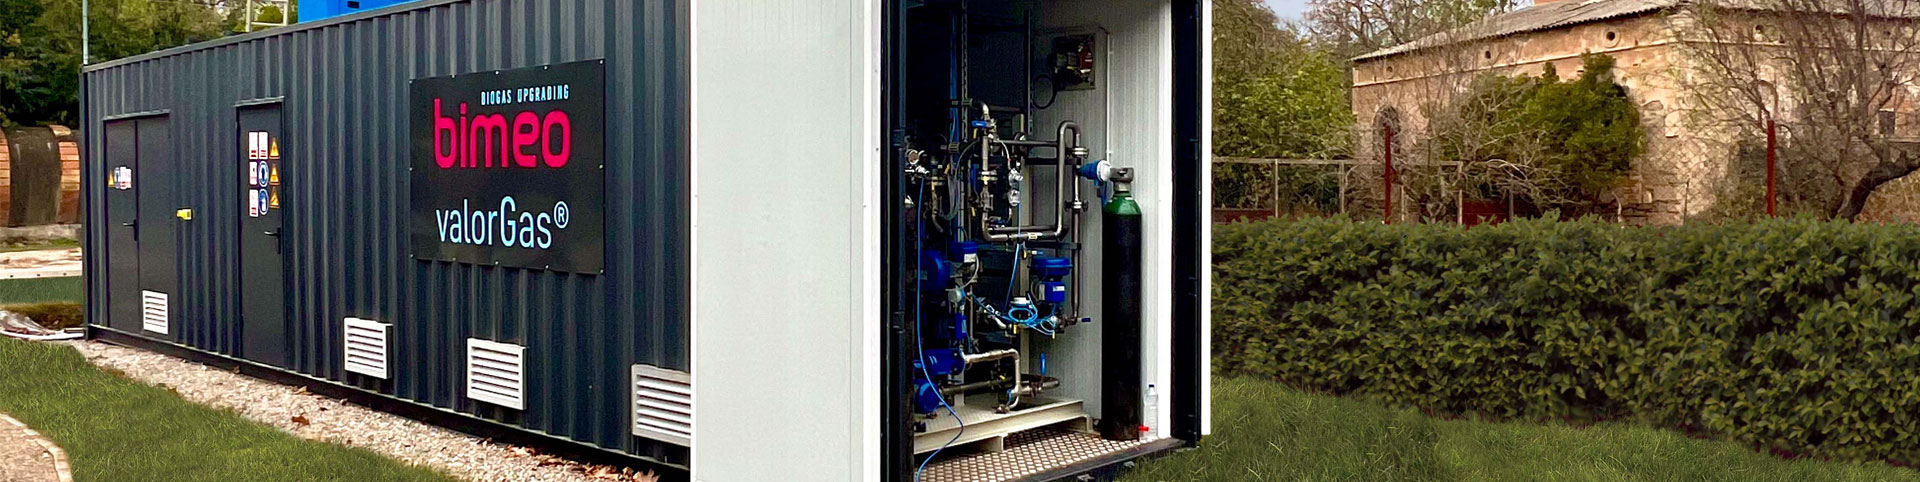 Biogas opgradering